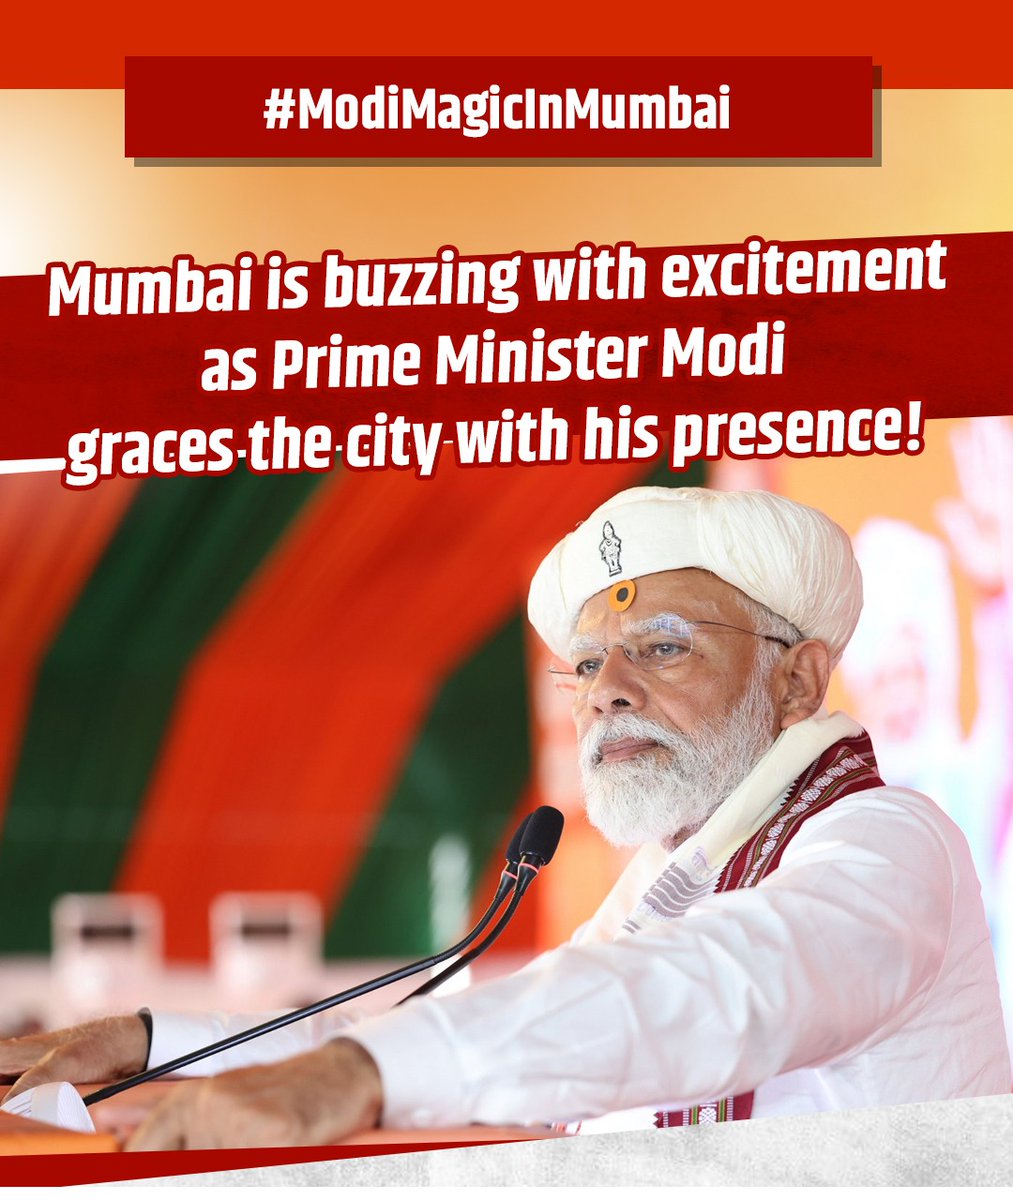 #ModiMajicinMumbai 
Proud moment for Mumbaikars to meet their parivar pramukh. Abki baar 400 paar. Thank you Modi ji for gracing our city with your presence.
@narendramodi
@AmitShahOffice 
@PiyushGoyal 
@BJPMMMumbai 
@manishaBJP